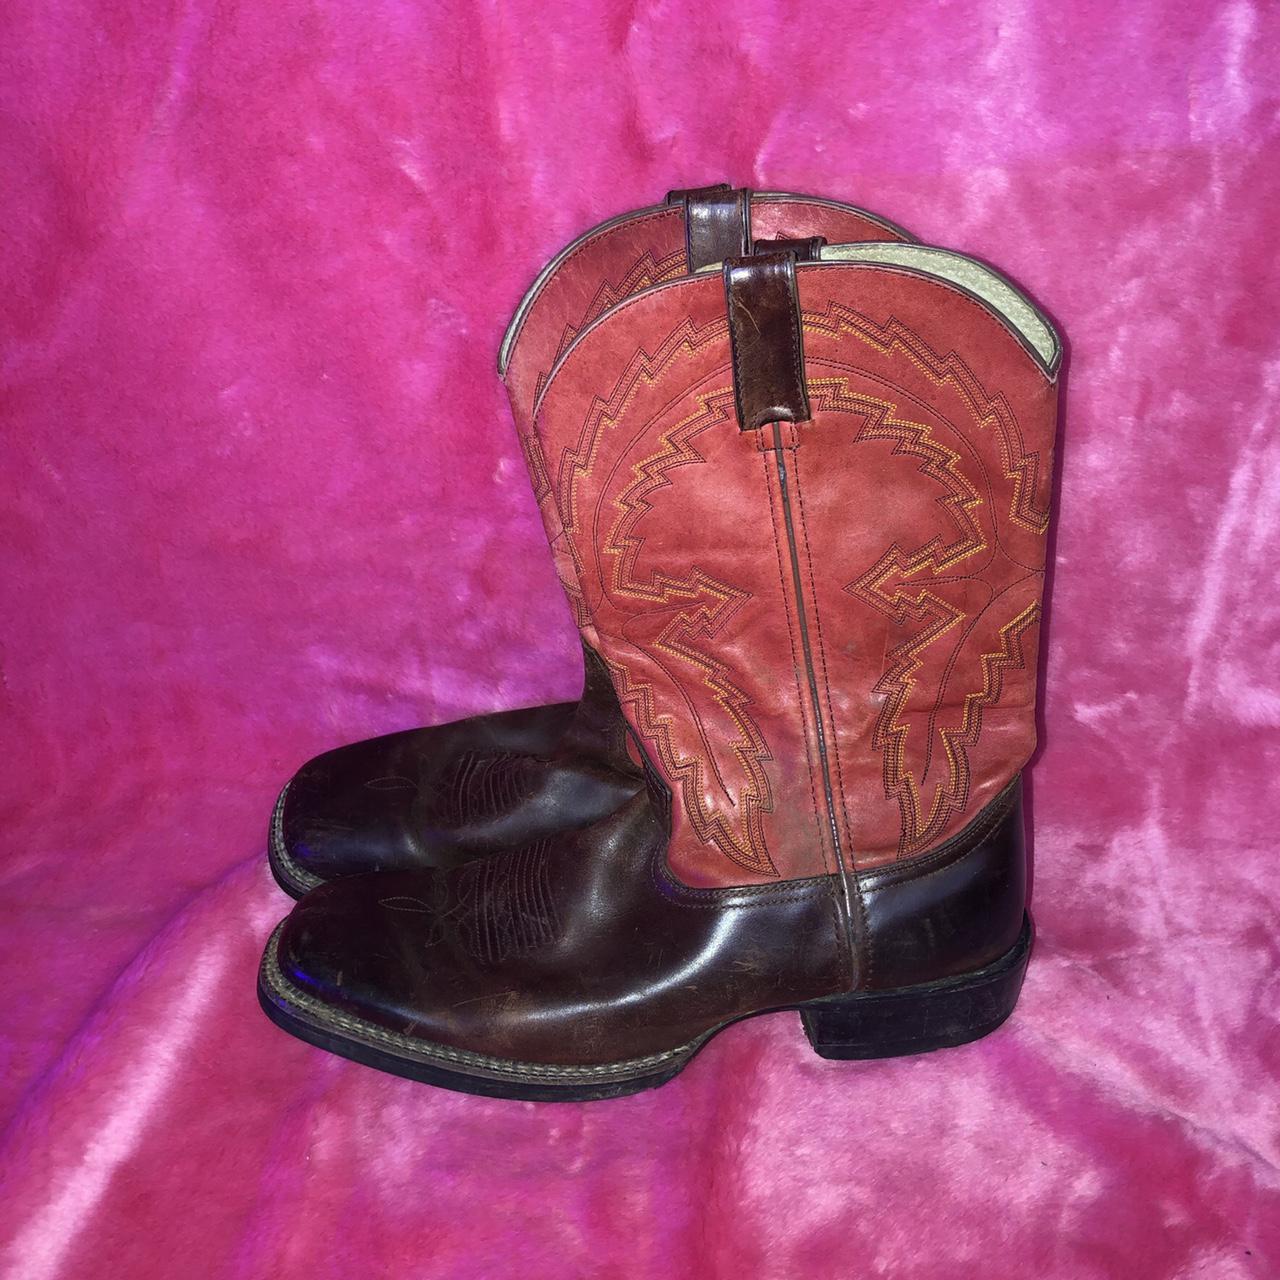 Product Image 2 - Vintage Durango leather cowboy/western boots.